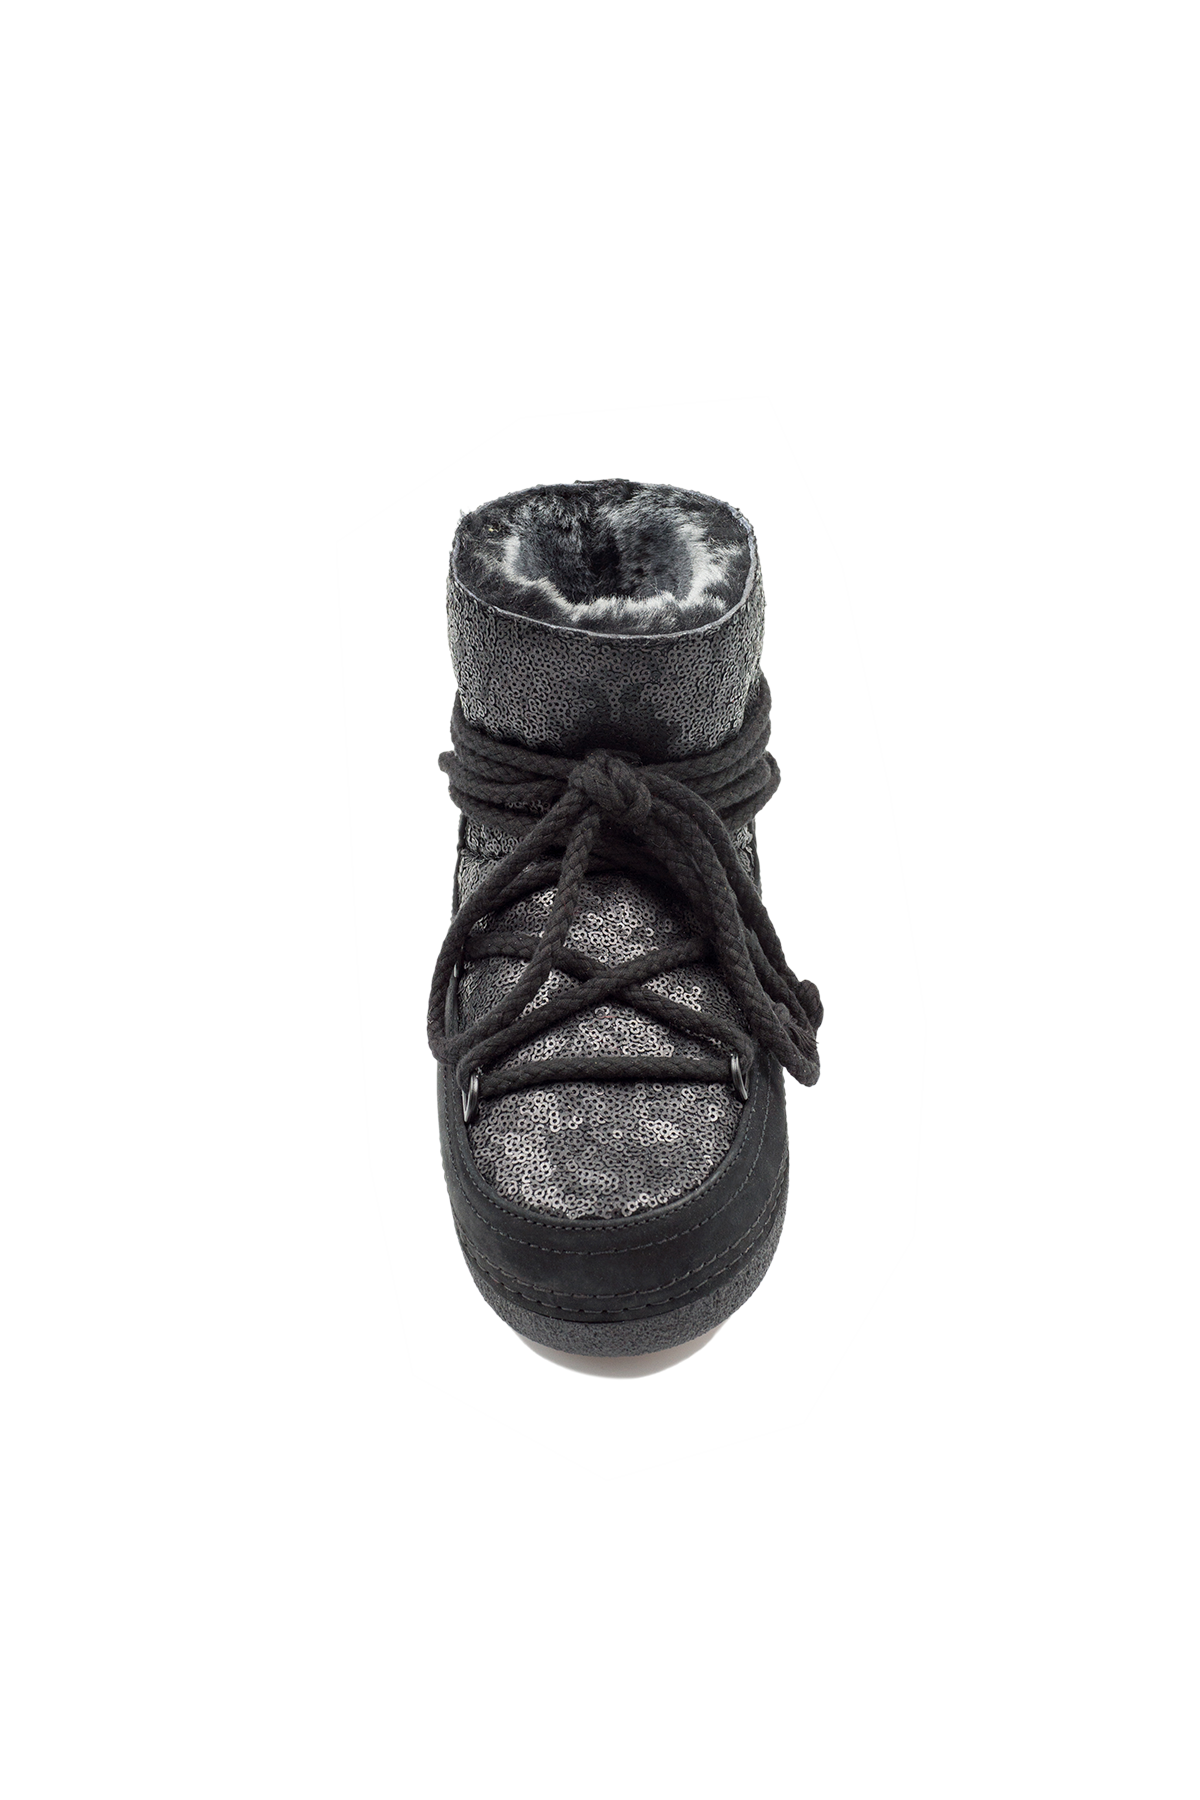 Sequin Boot by Inuikii - in Black